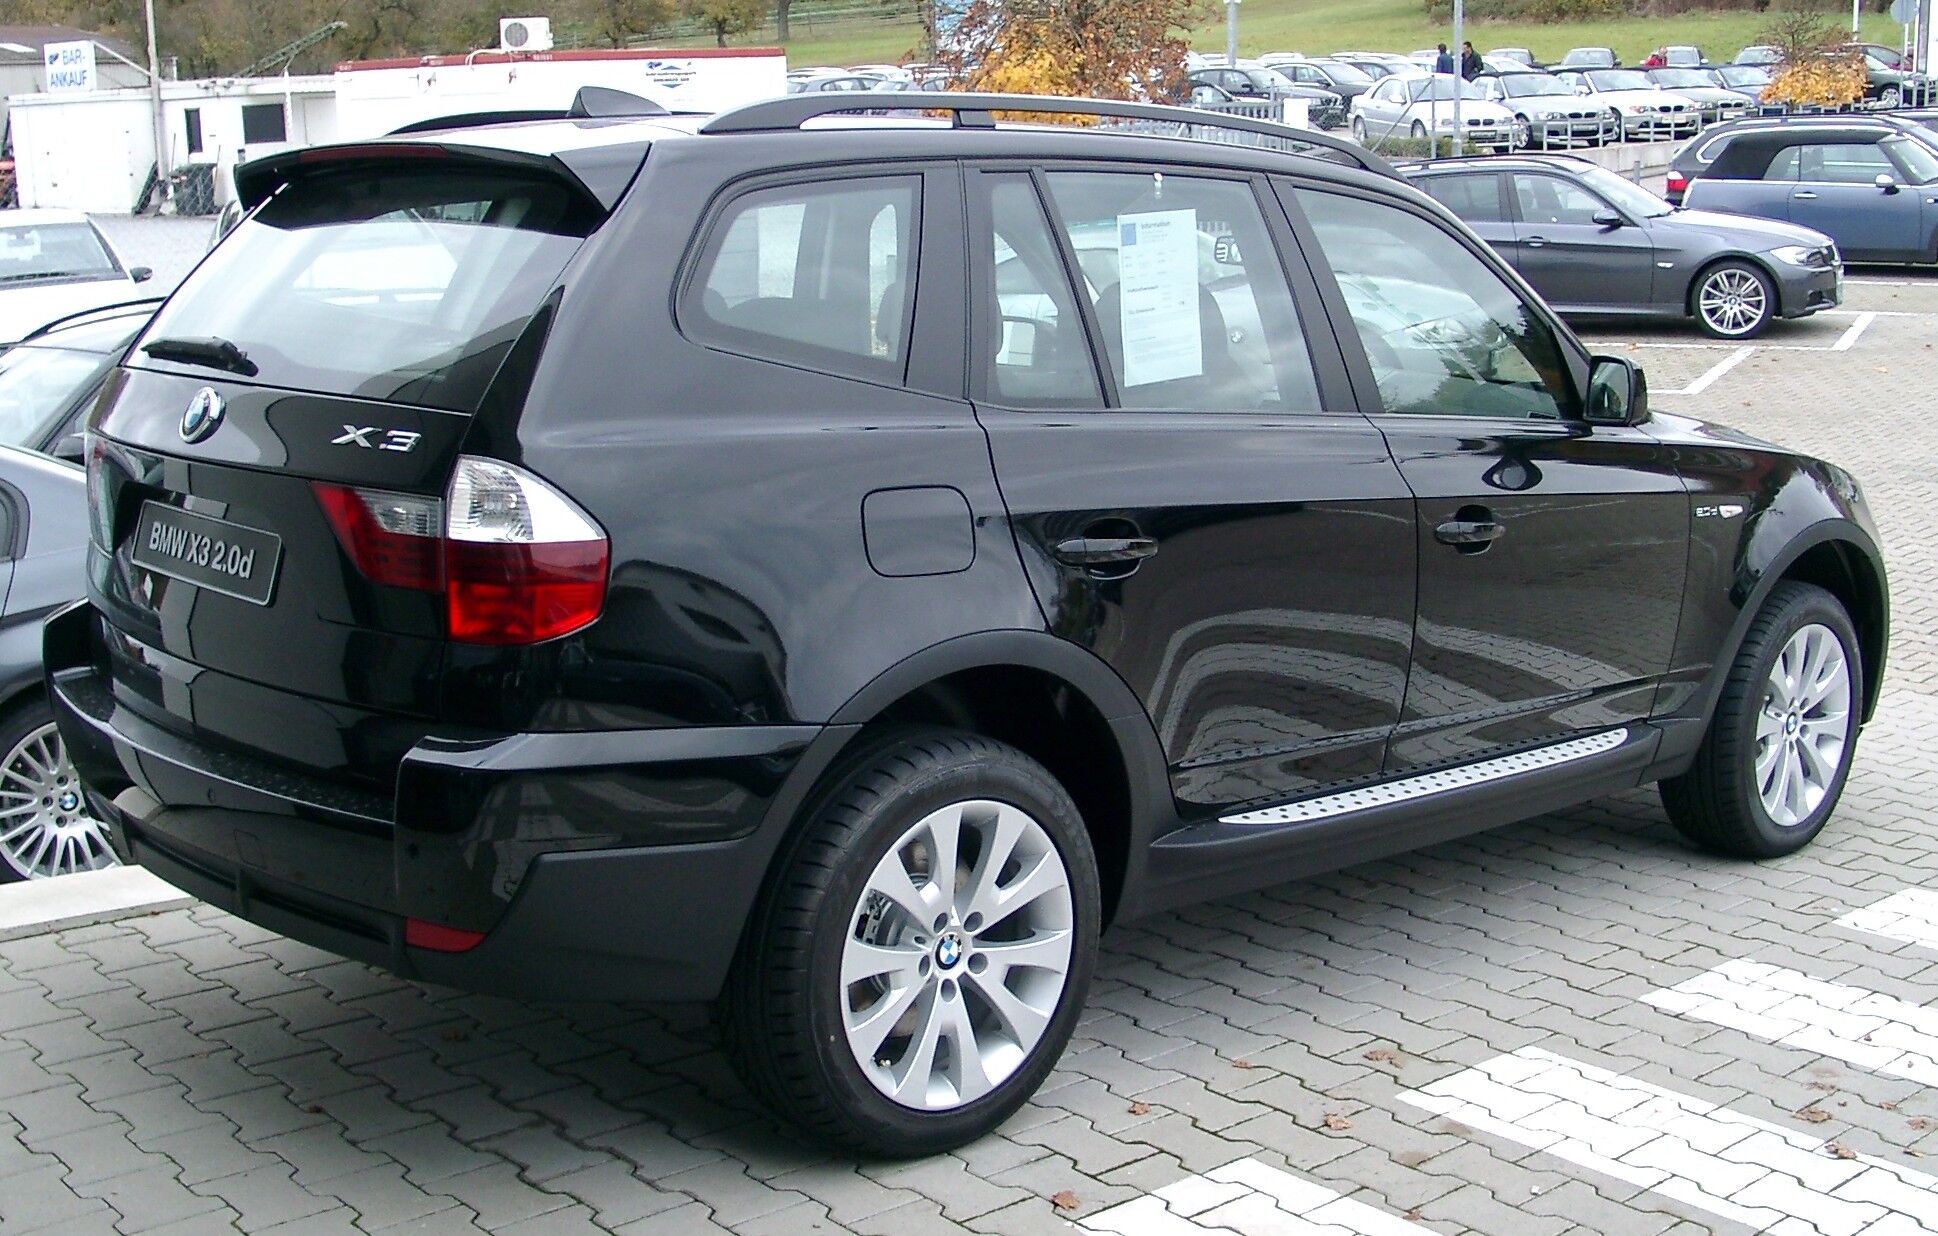 File:BMW E93 rear 20080524.jpg - Wikimedia Commons